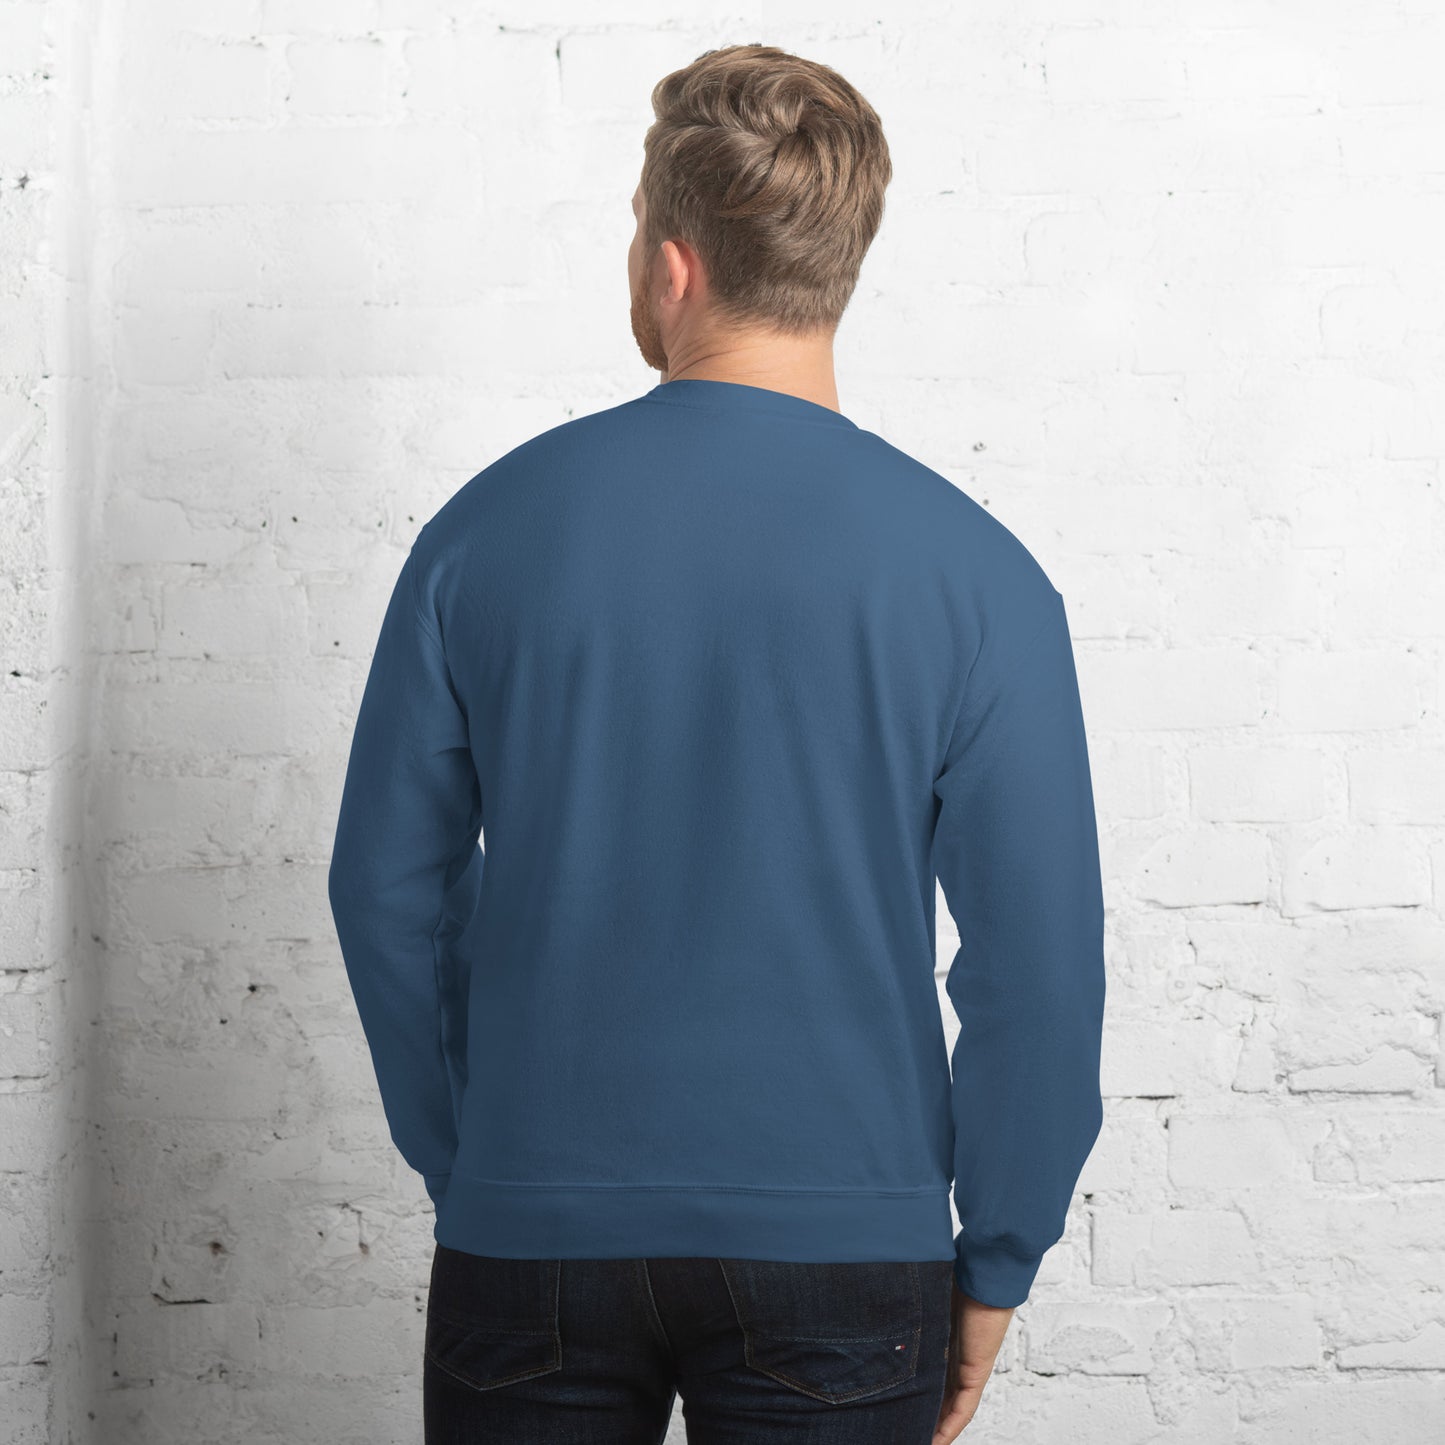 Turpan Unisex Sweatshirt for man